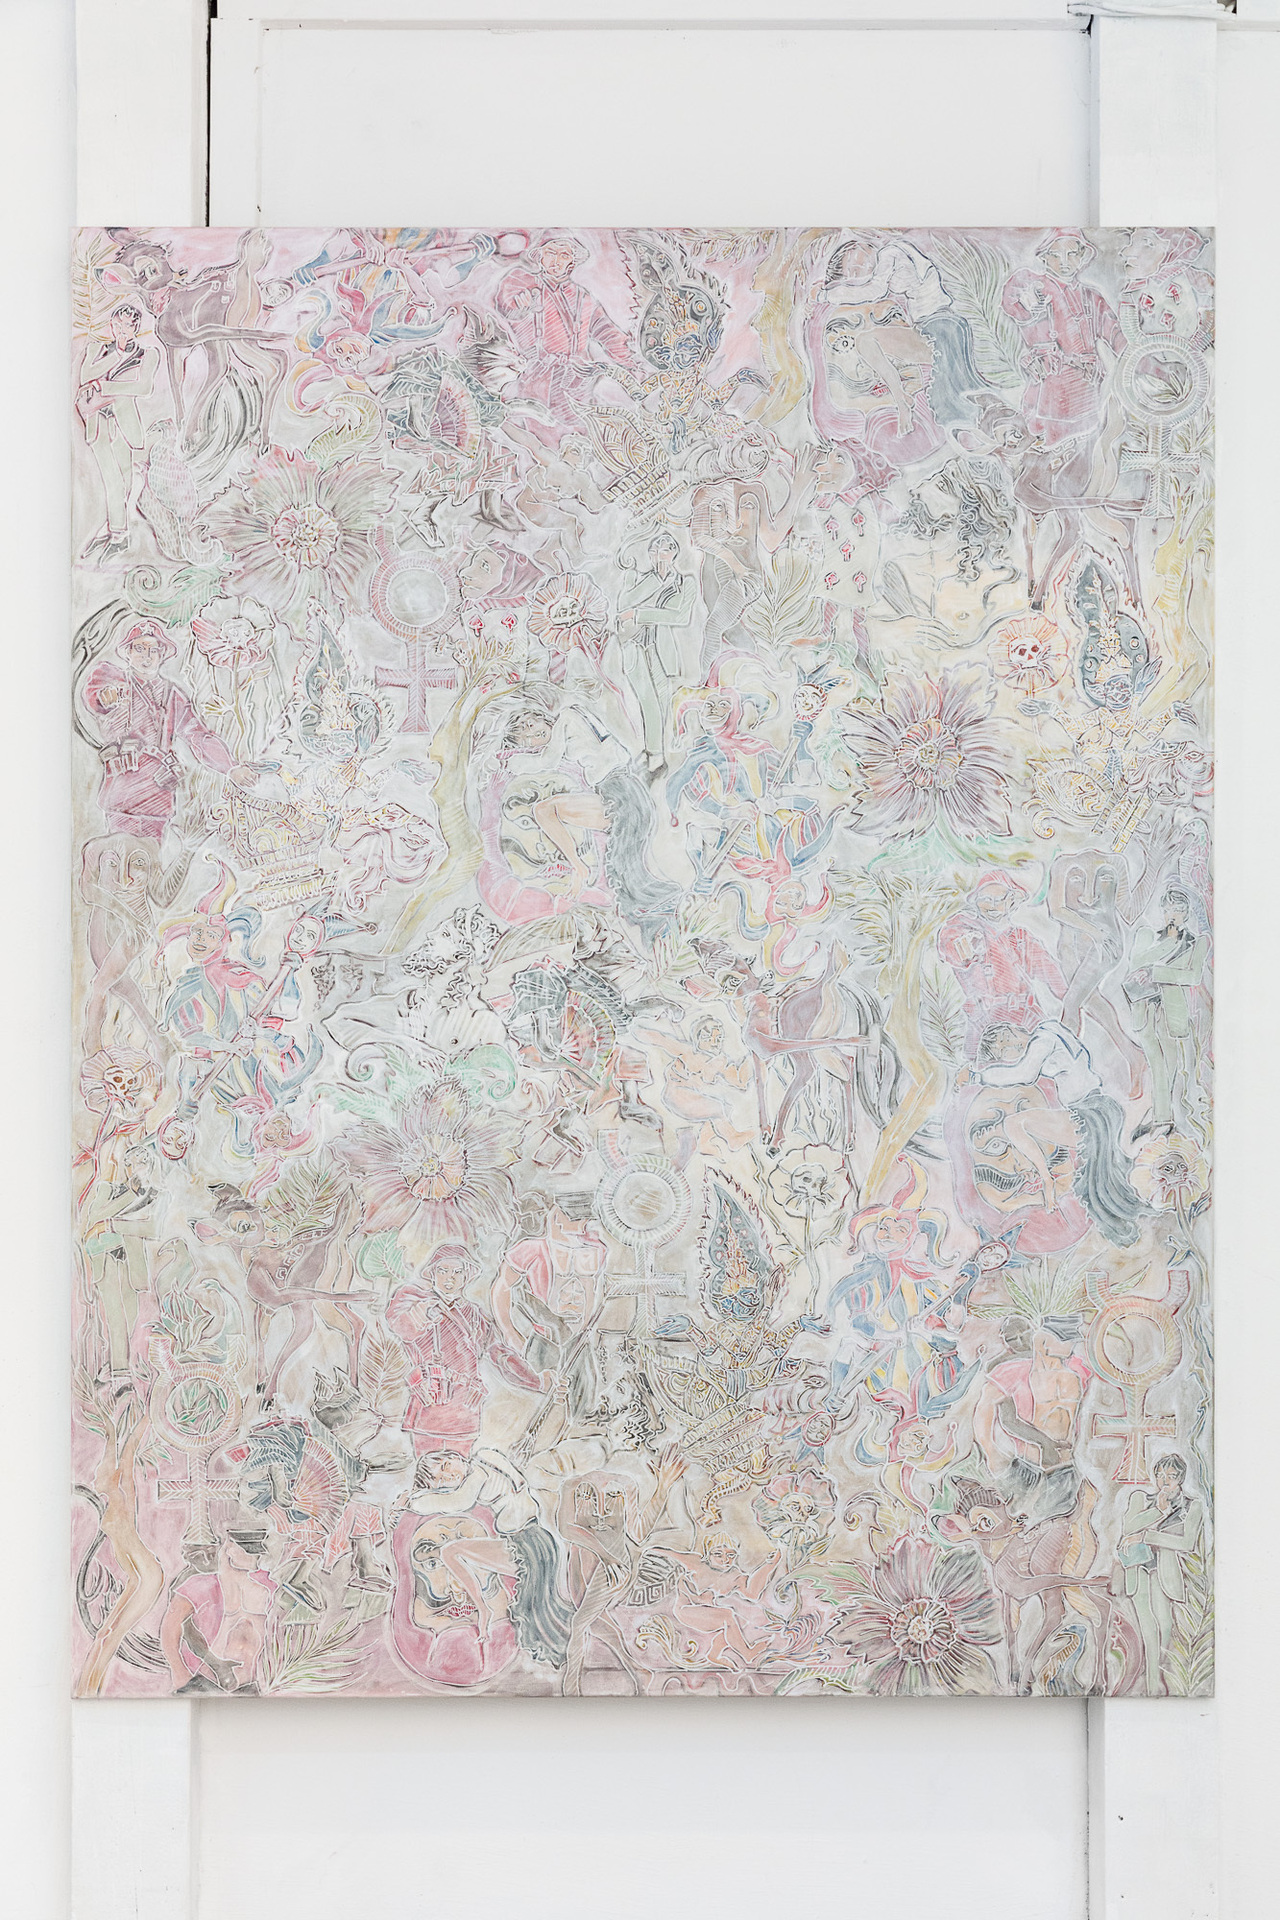 08. Daniel Moldoveanu, Untitled, 2020, Acrylic, correction pen and white marker on canvas, 180 x 140 cm